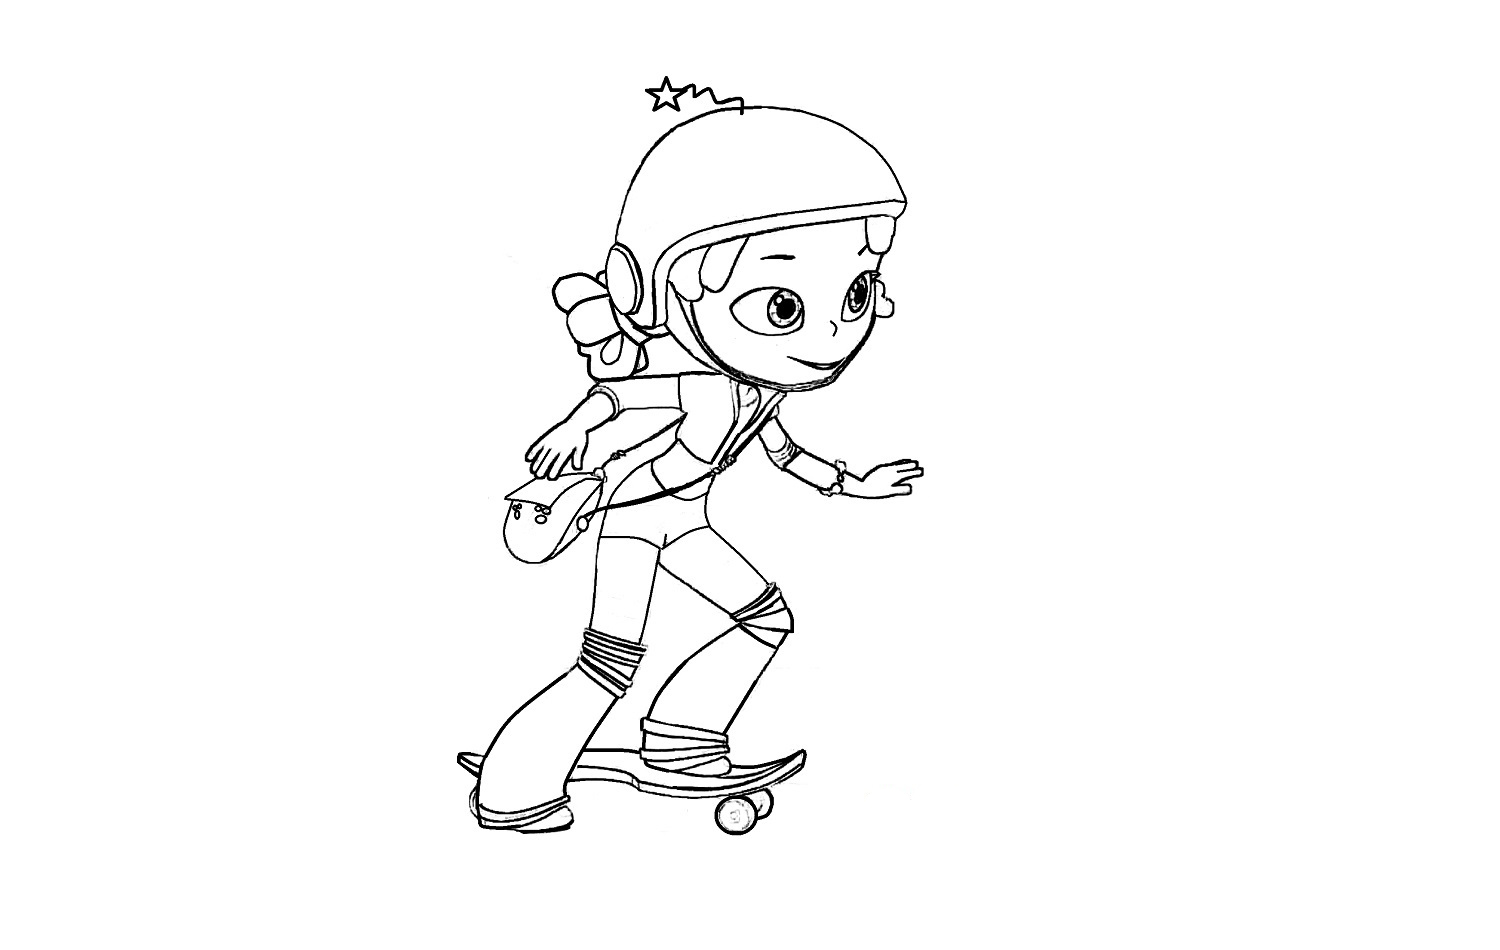 Alenka on a skateboard